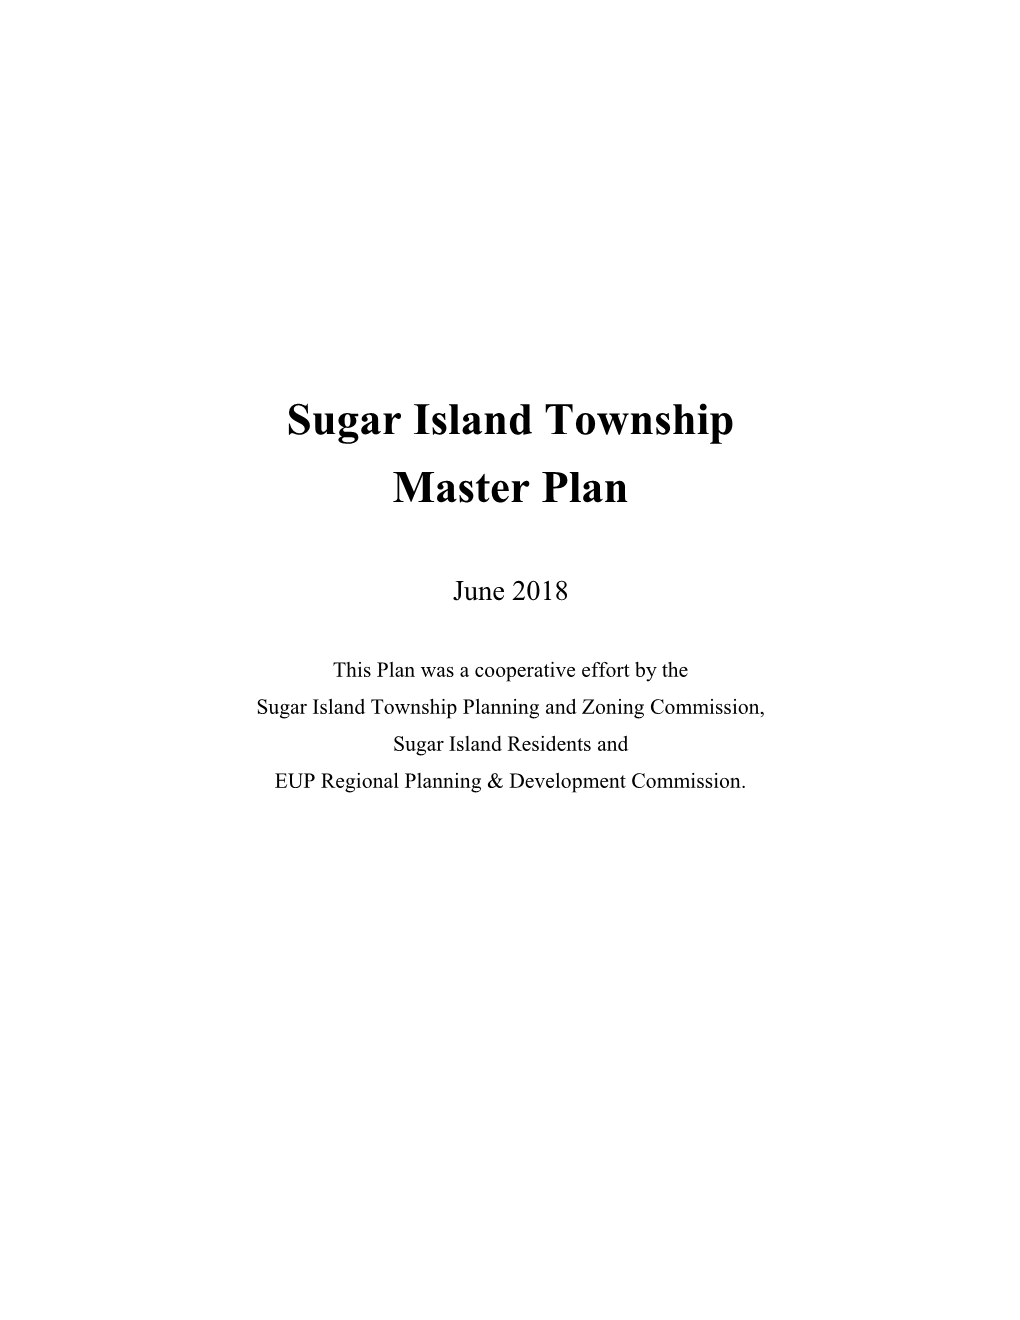 Sugar Island Township Master Plan